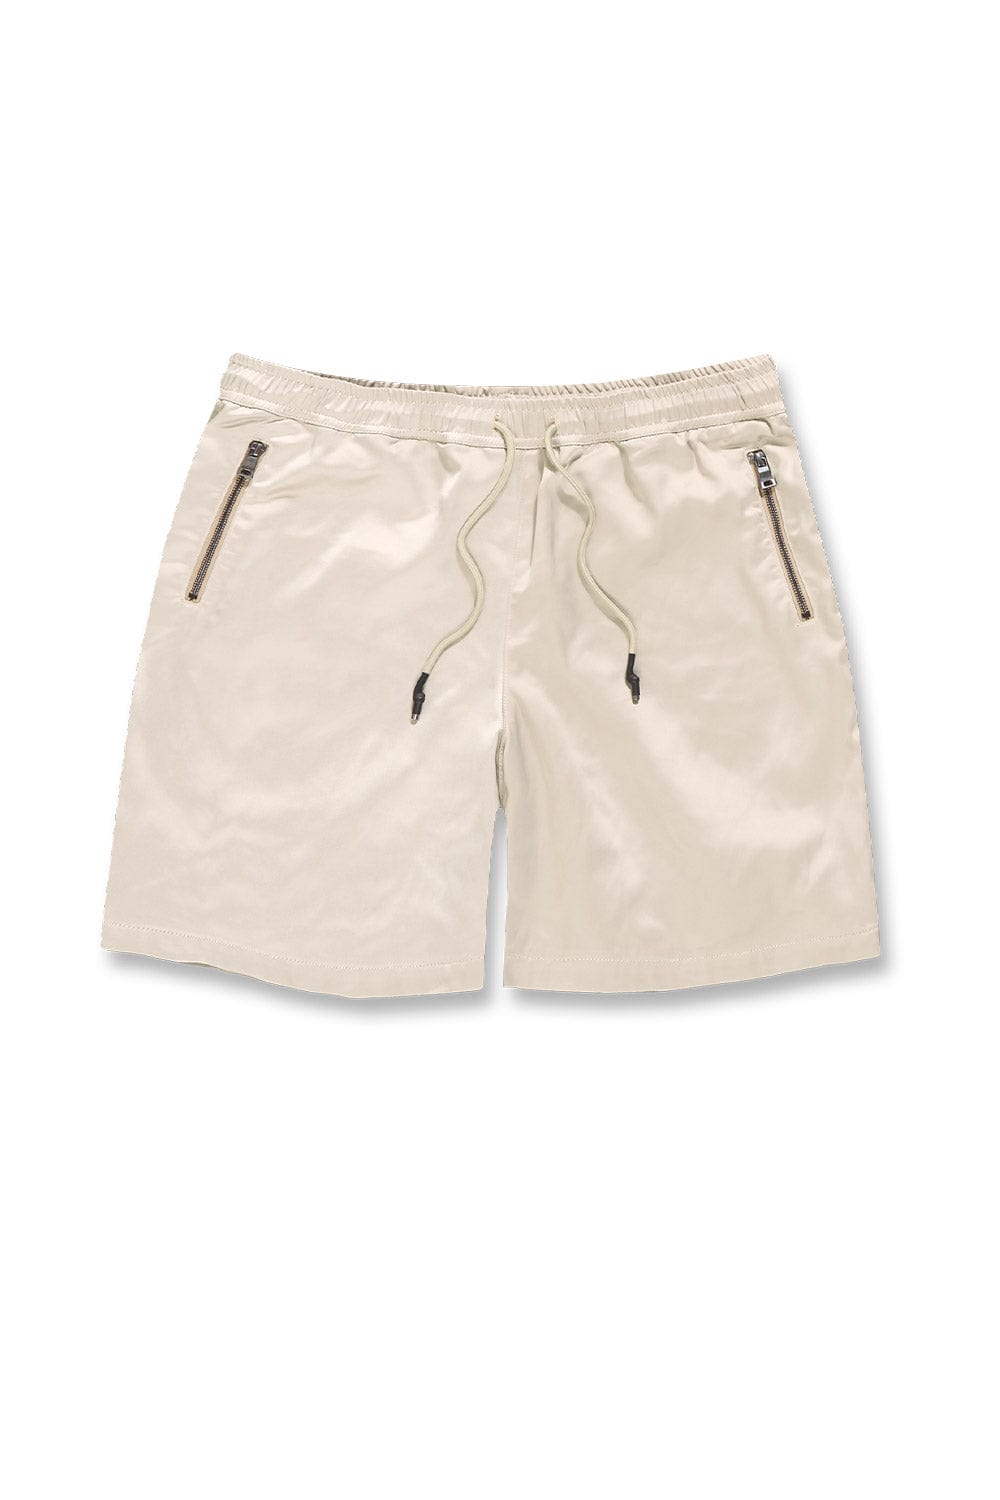 Jordan Craig Athletic - Lux Shorts Taupe / S